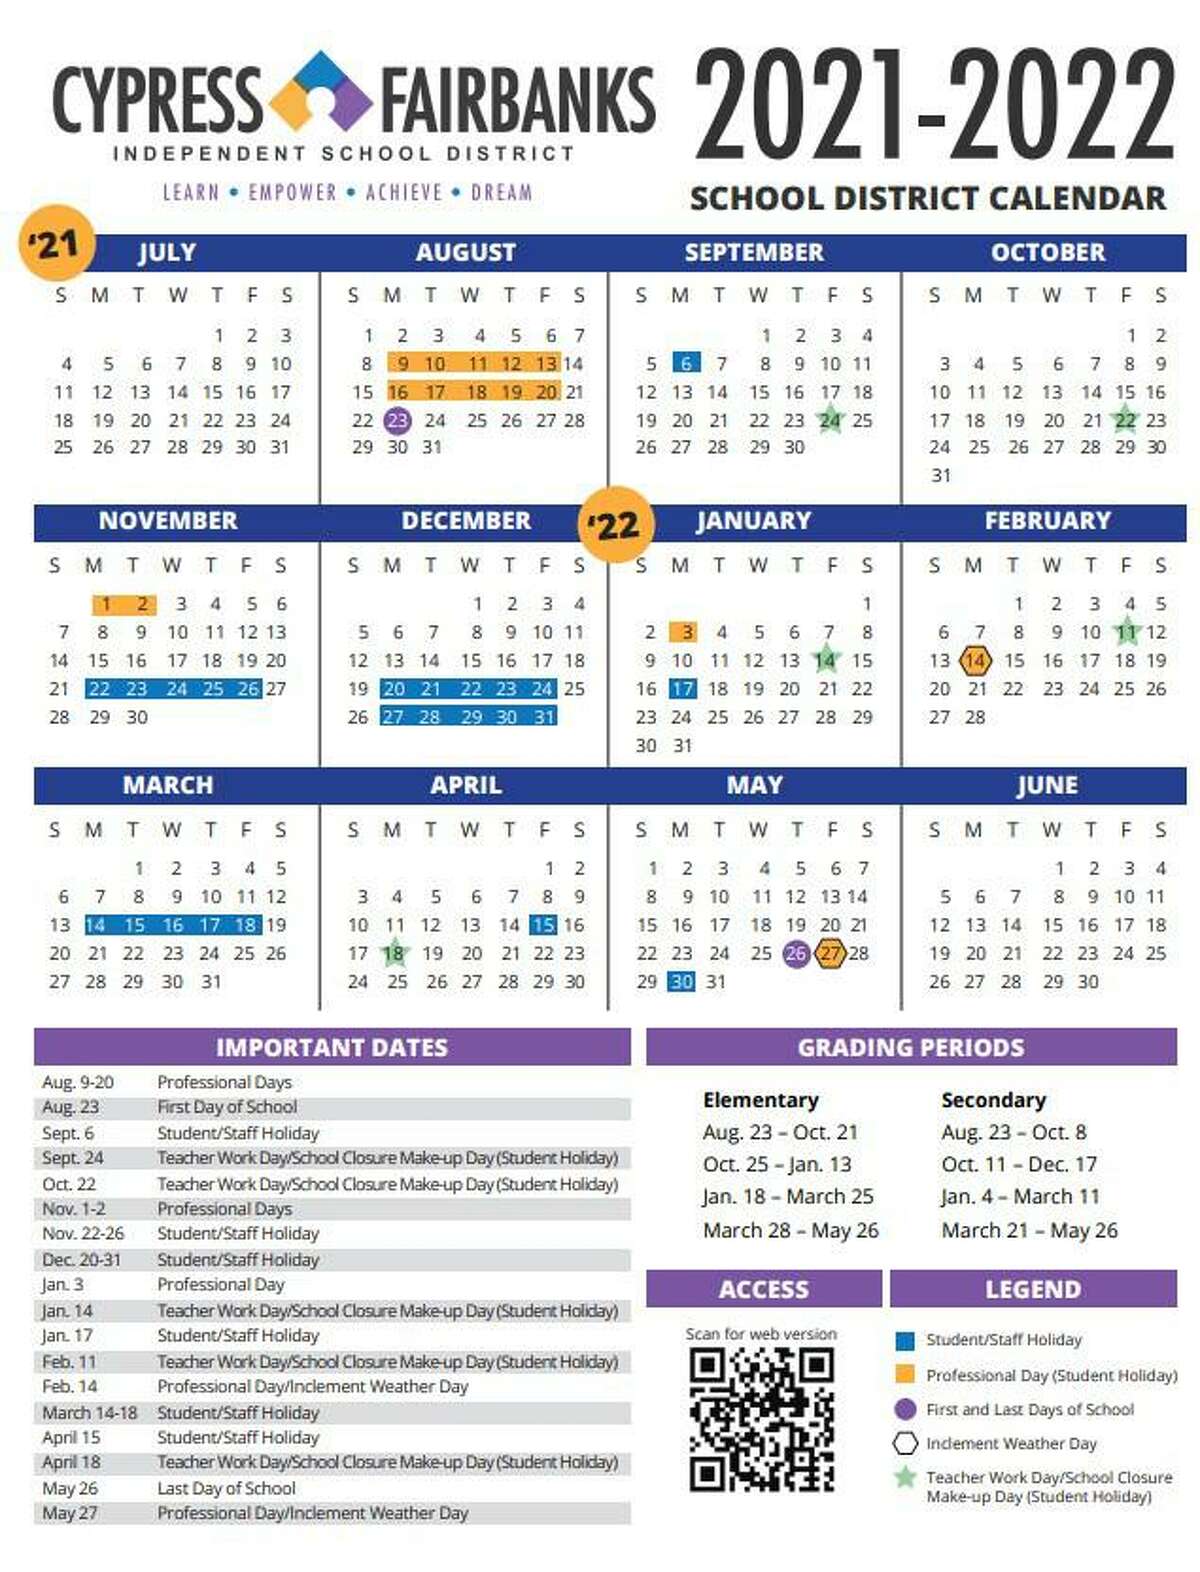 CyFair school notebook CFISD school board approves calendar for 2021